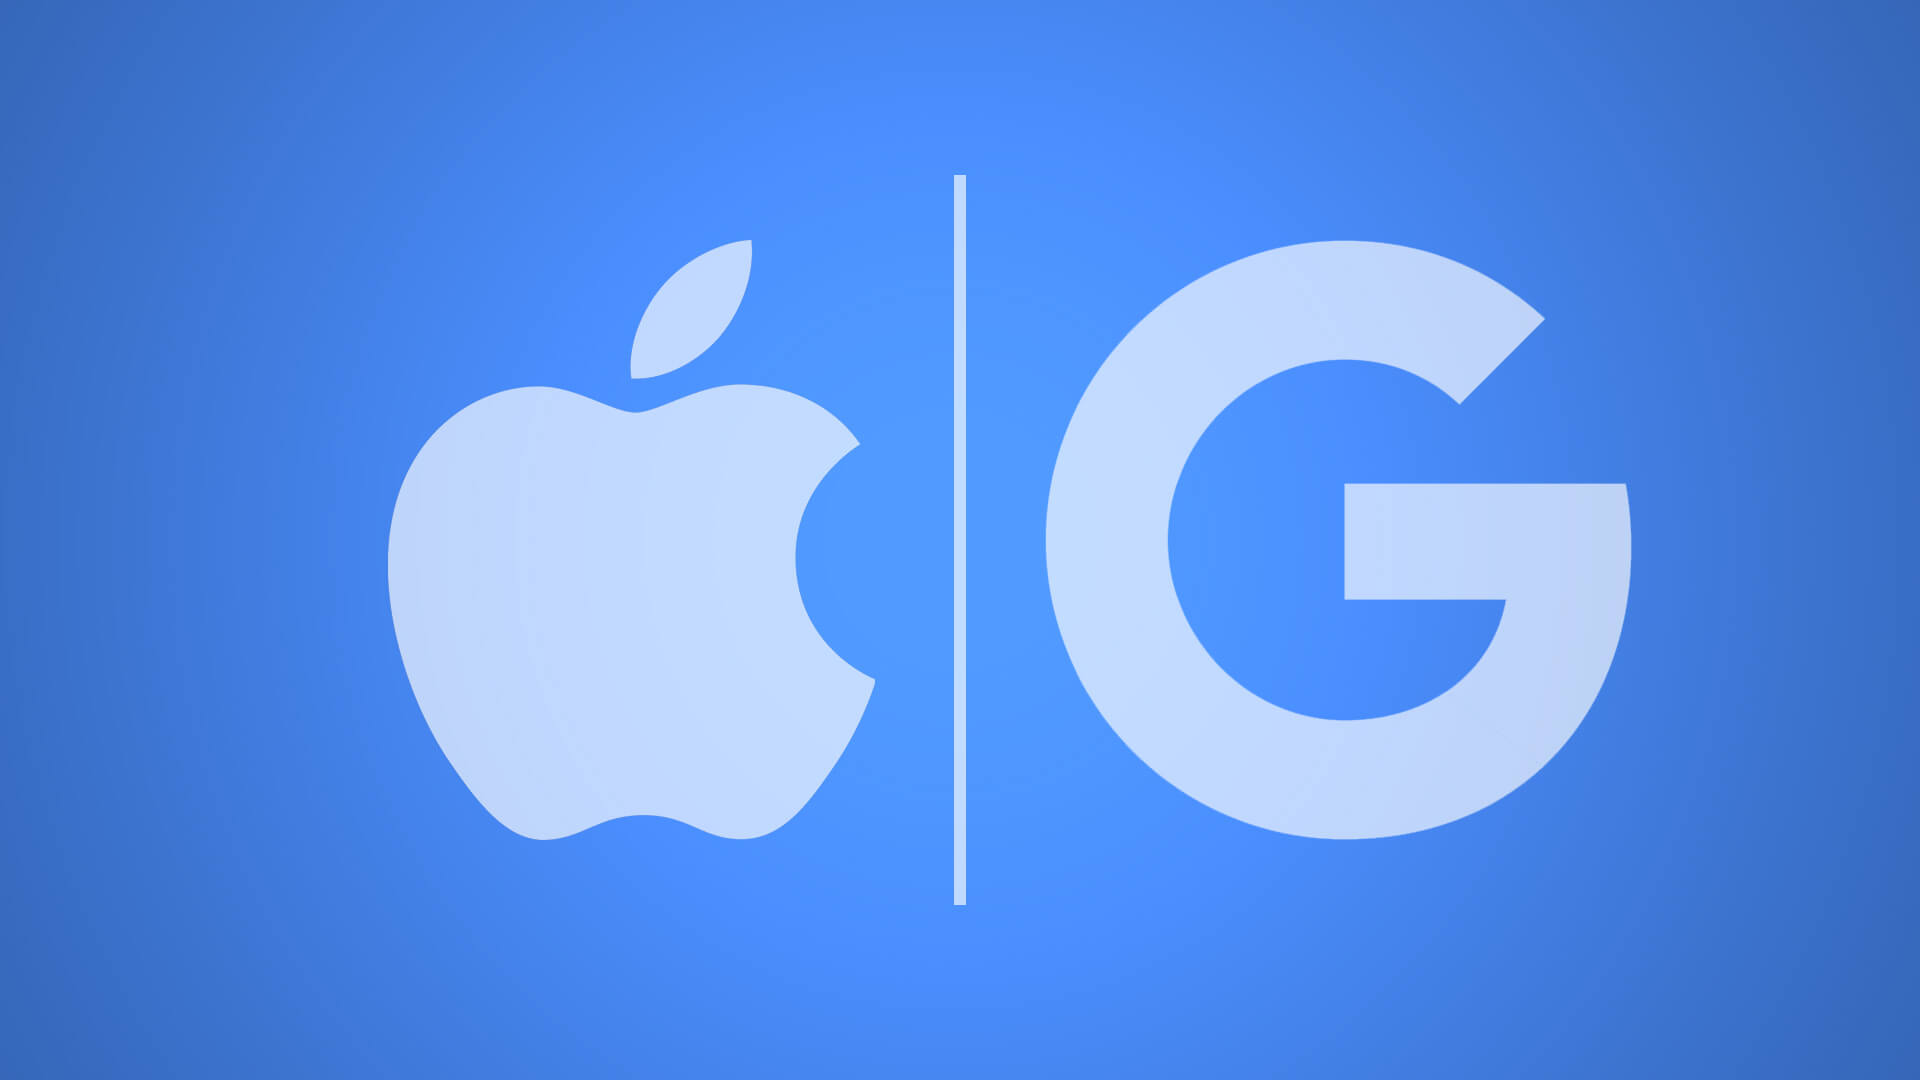 Apple and Google logo